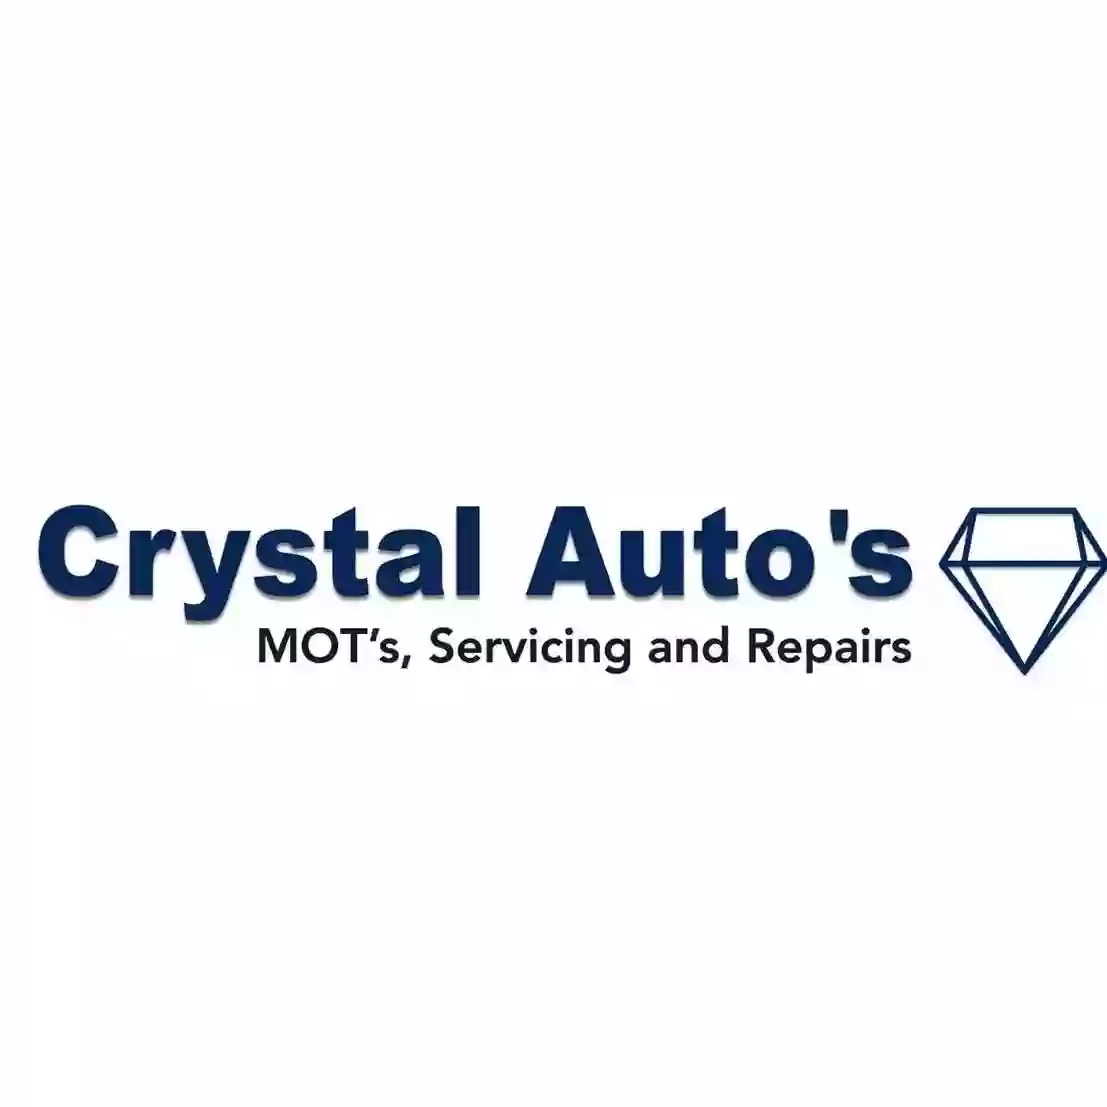 Crystal Auto's